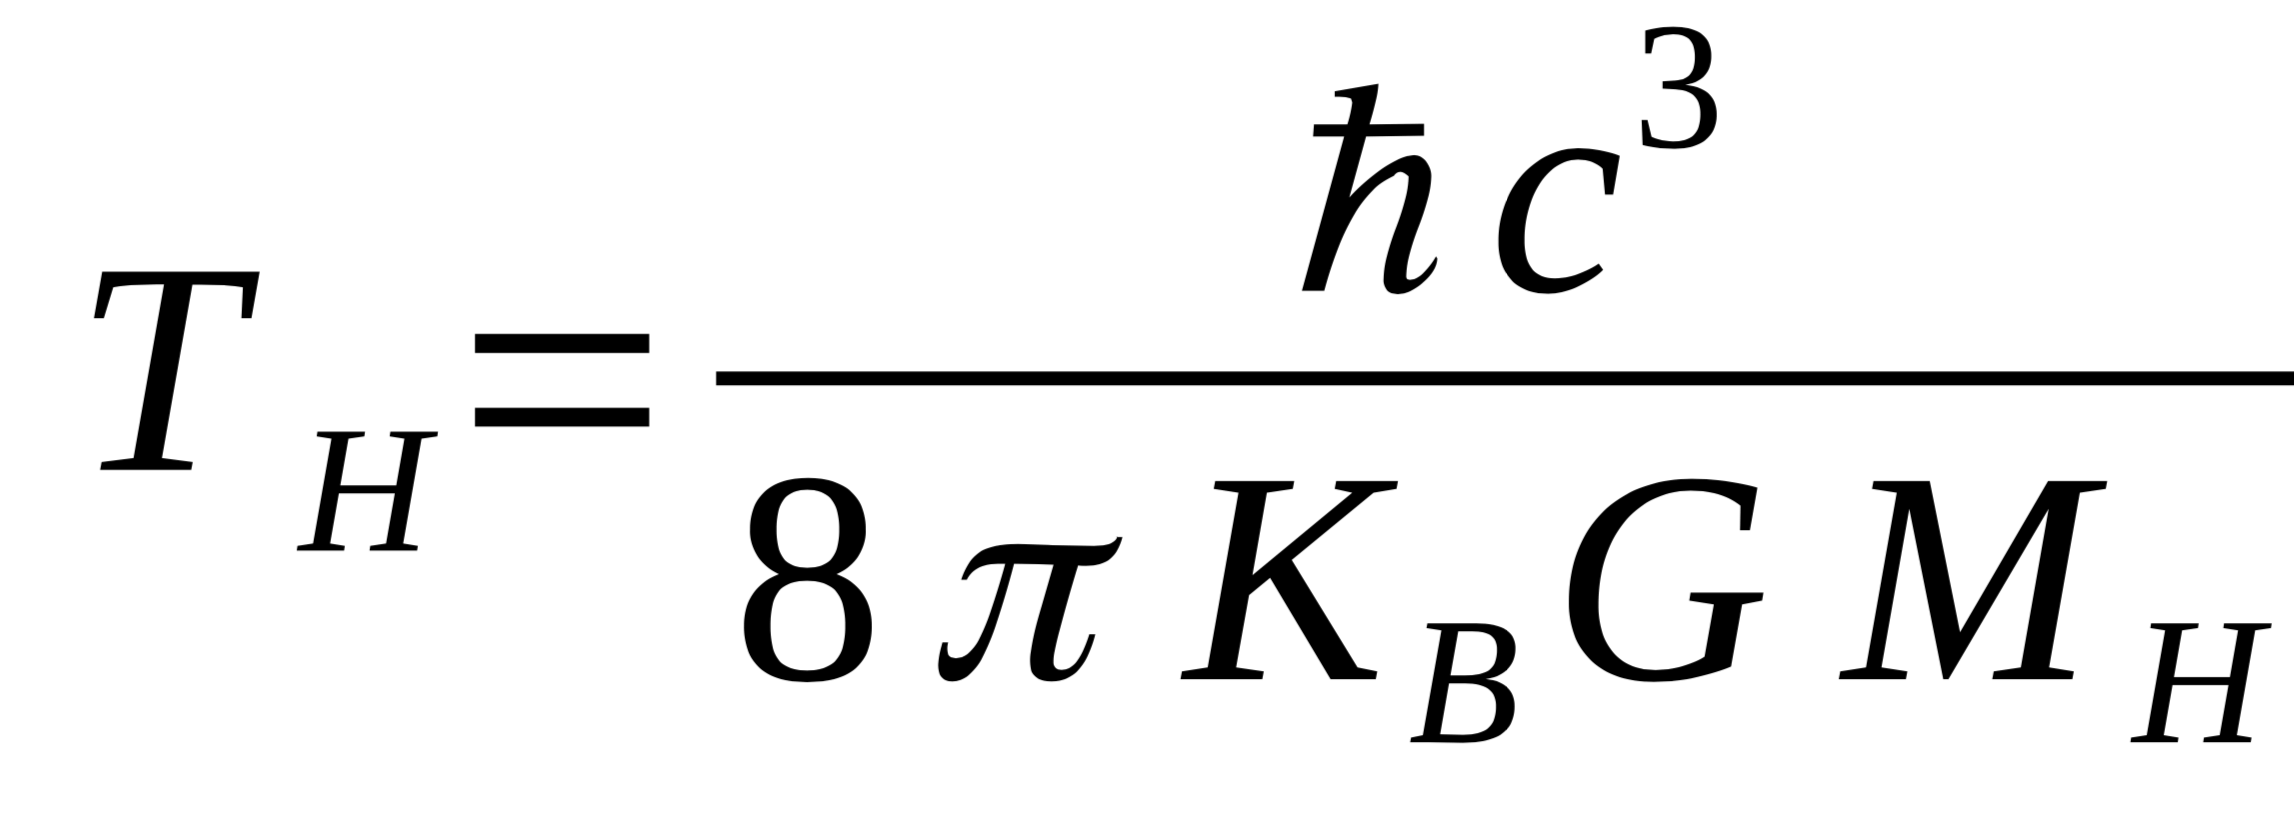 Hawking radiation mathematical form